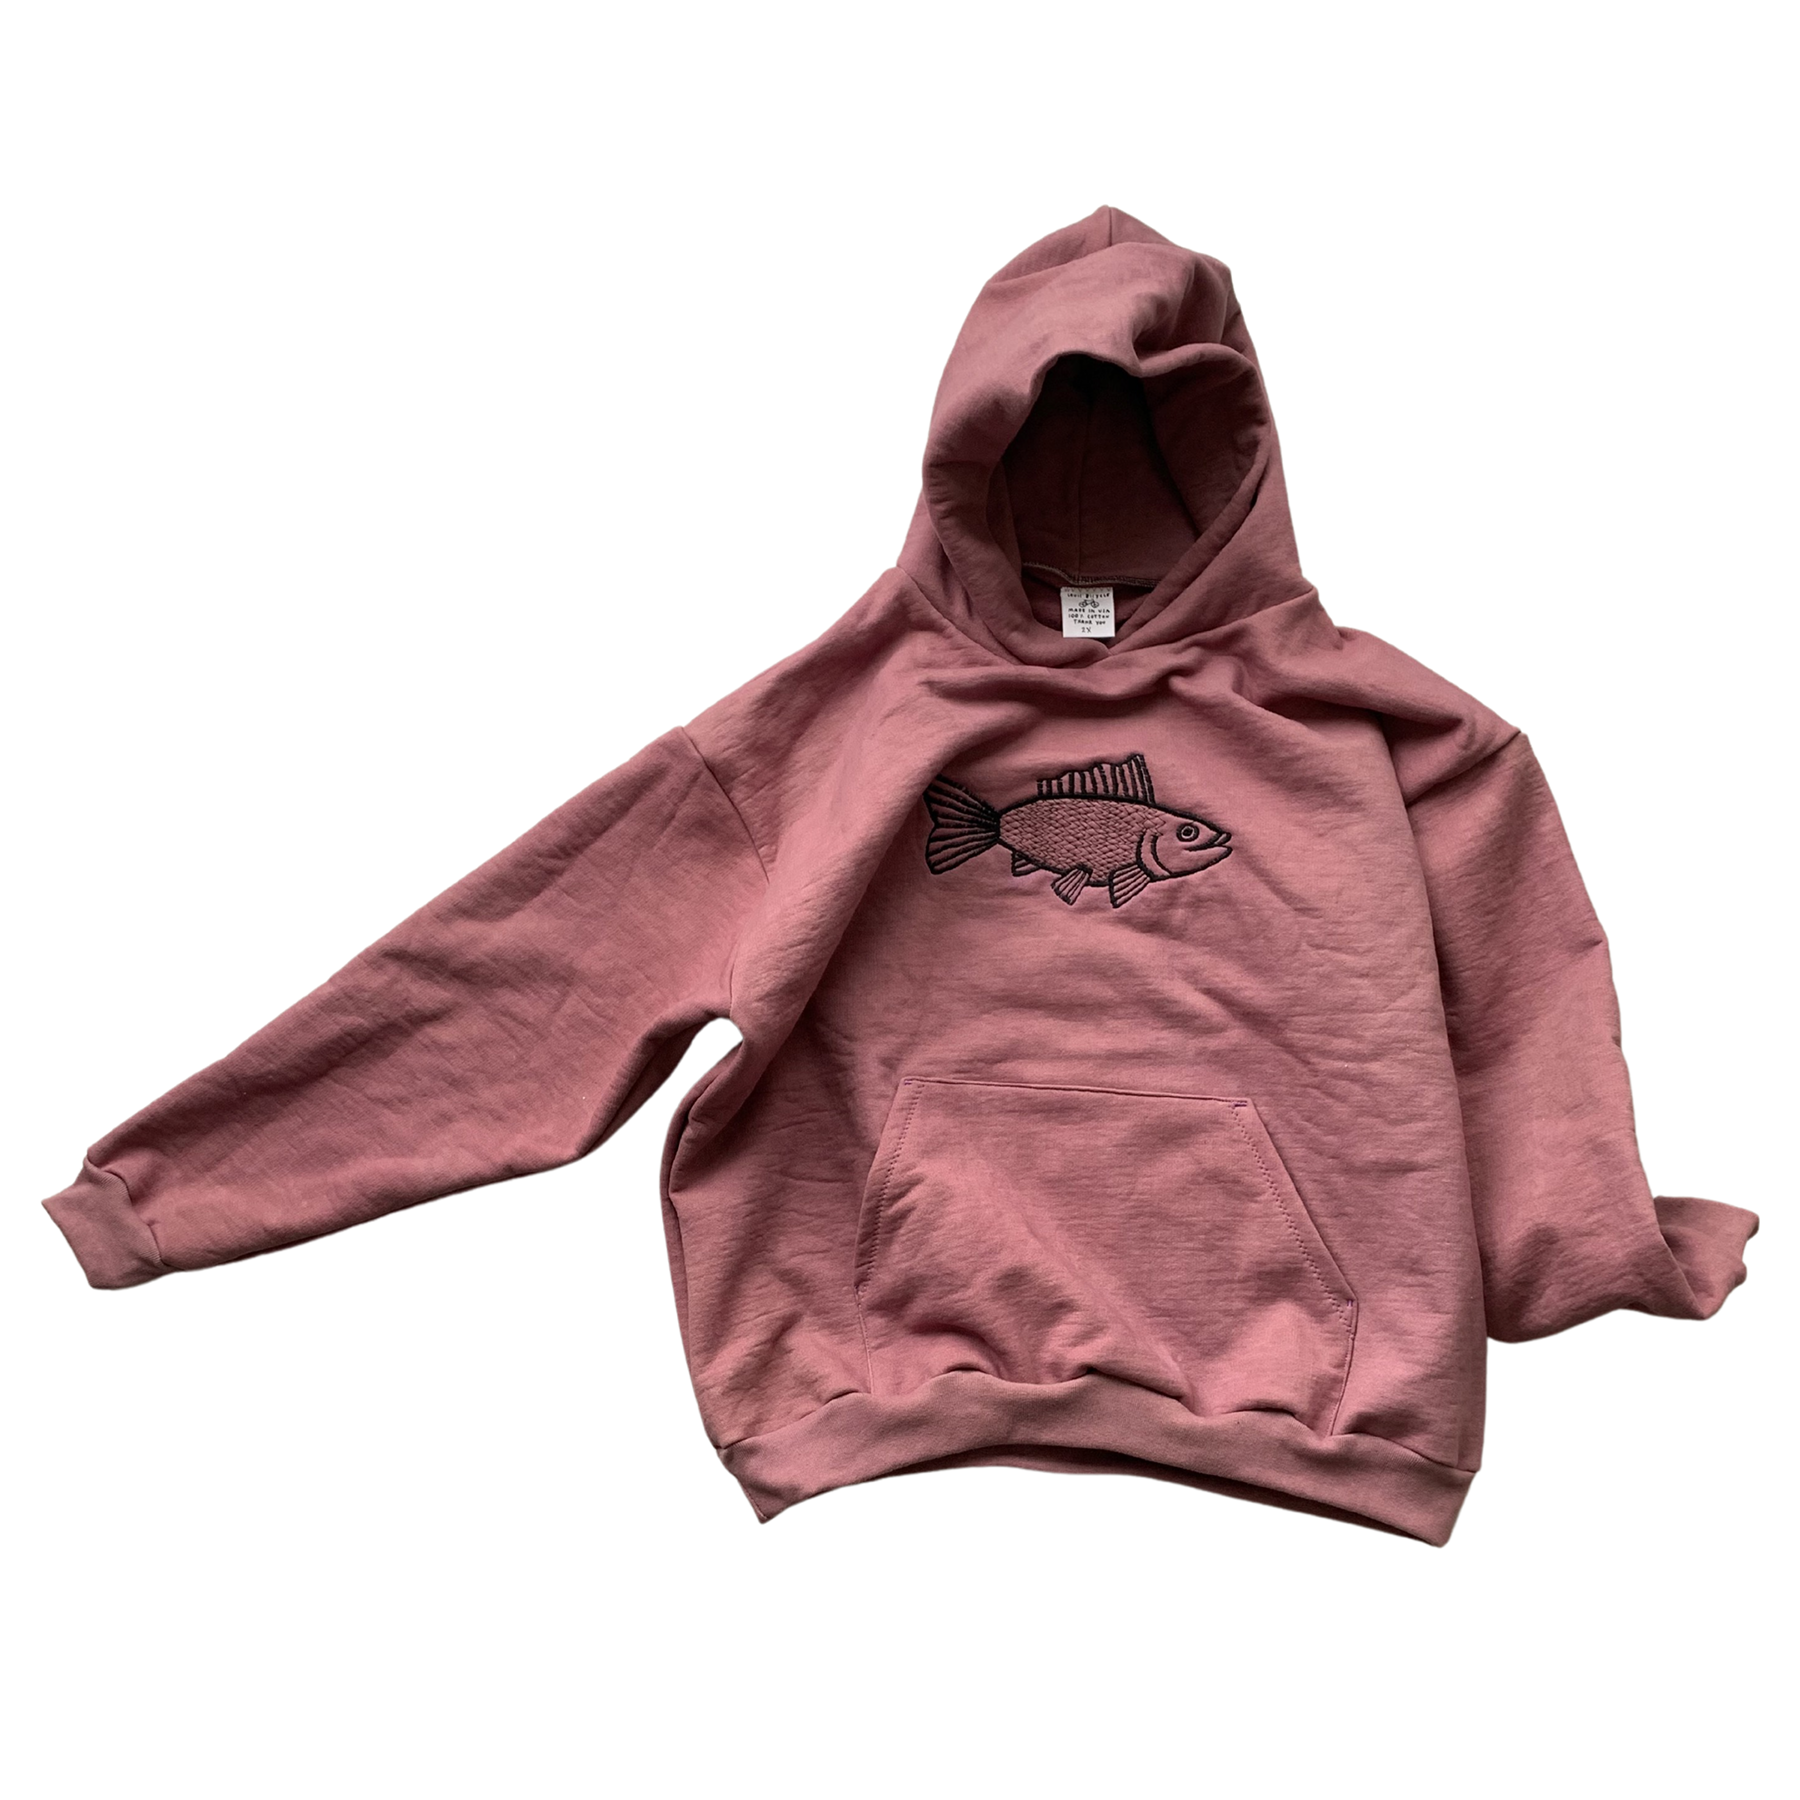 heavy fleece hoodie - organic usa cotton - embroidered - 2X